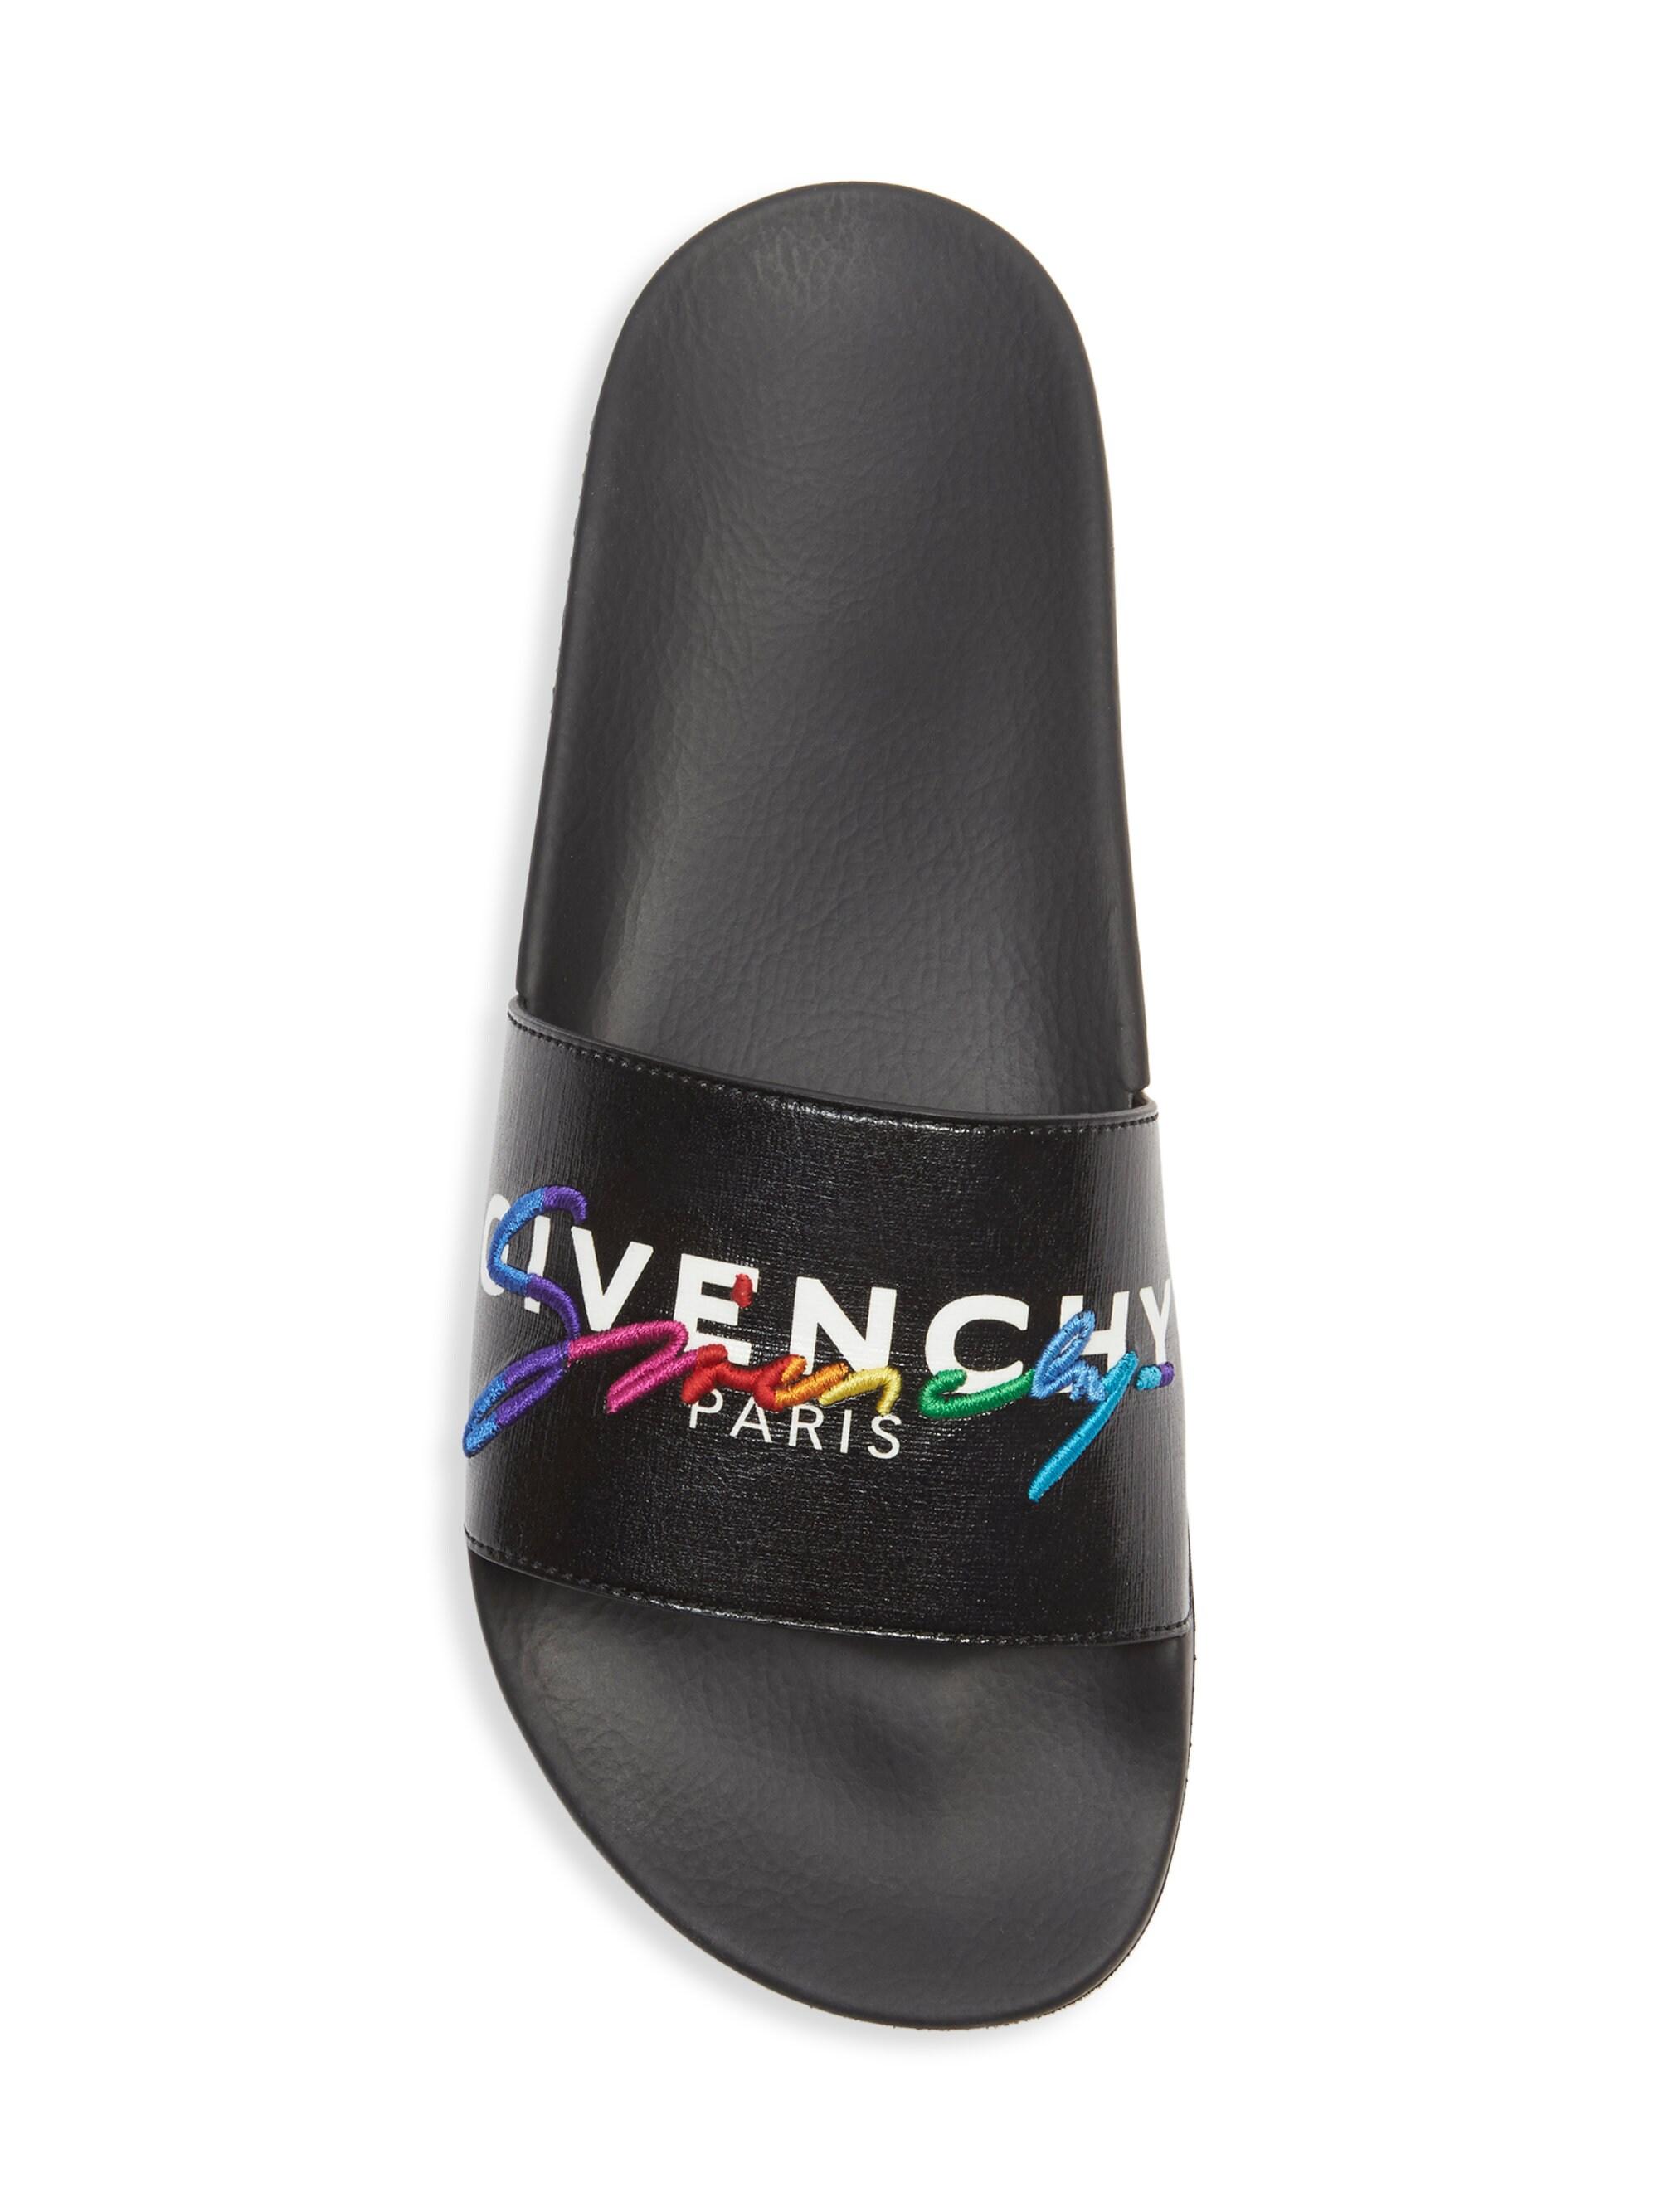 Givenchy Embroidered Logo Pool Slides in Black for Men - Lyst